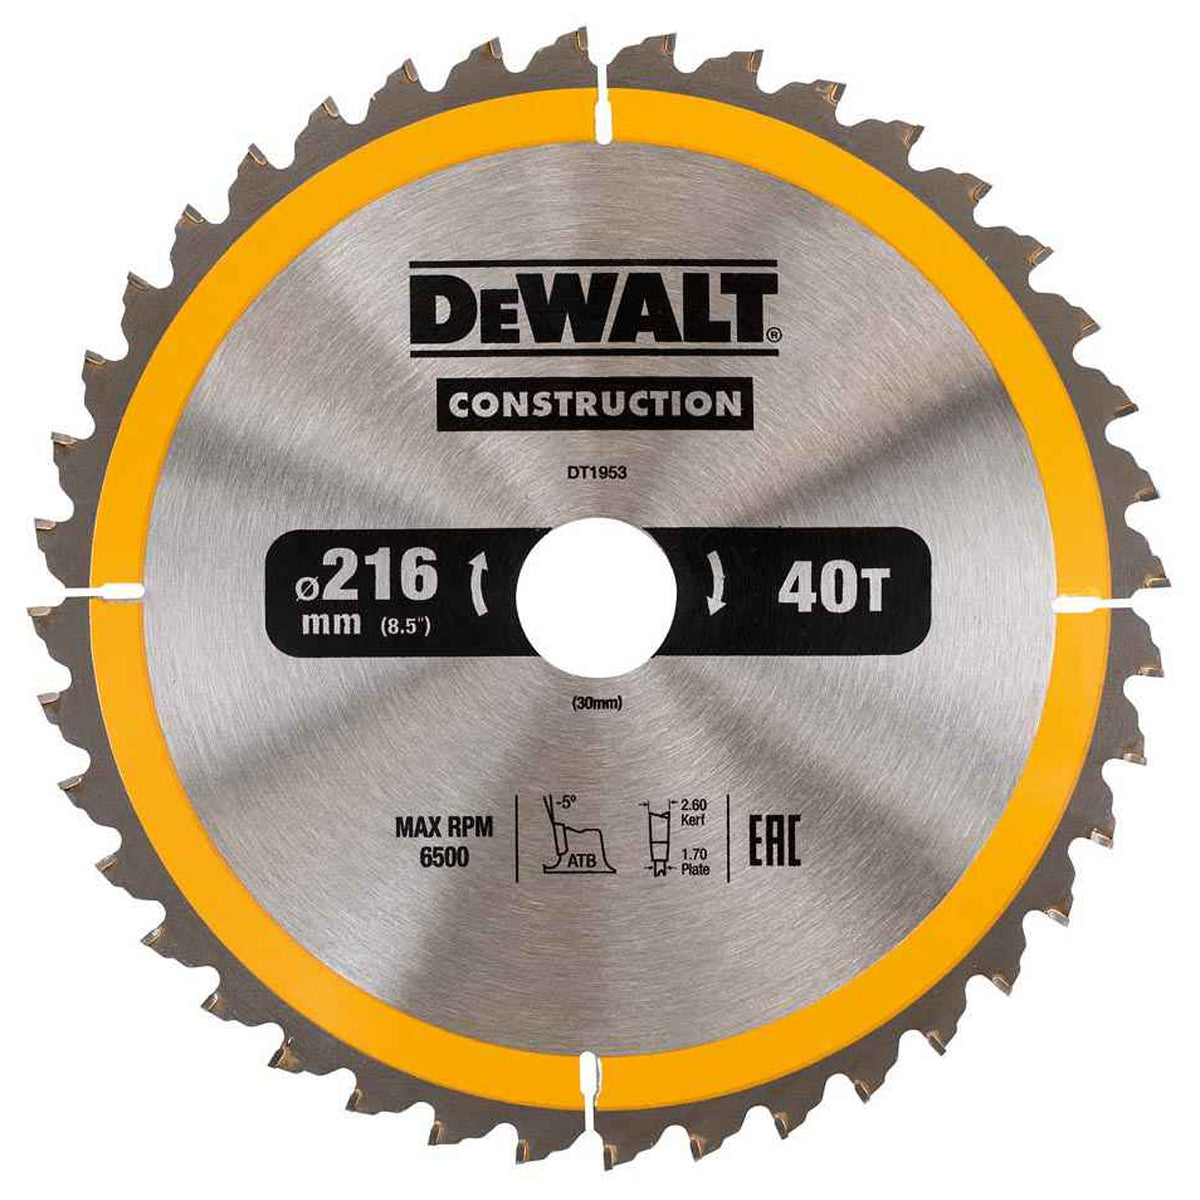 DeWalt 216mm 24T Construction Circular Saw Blade DT1952QZ